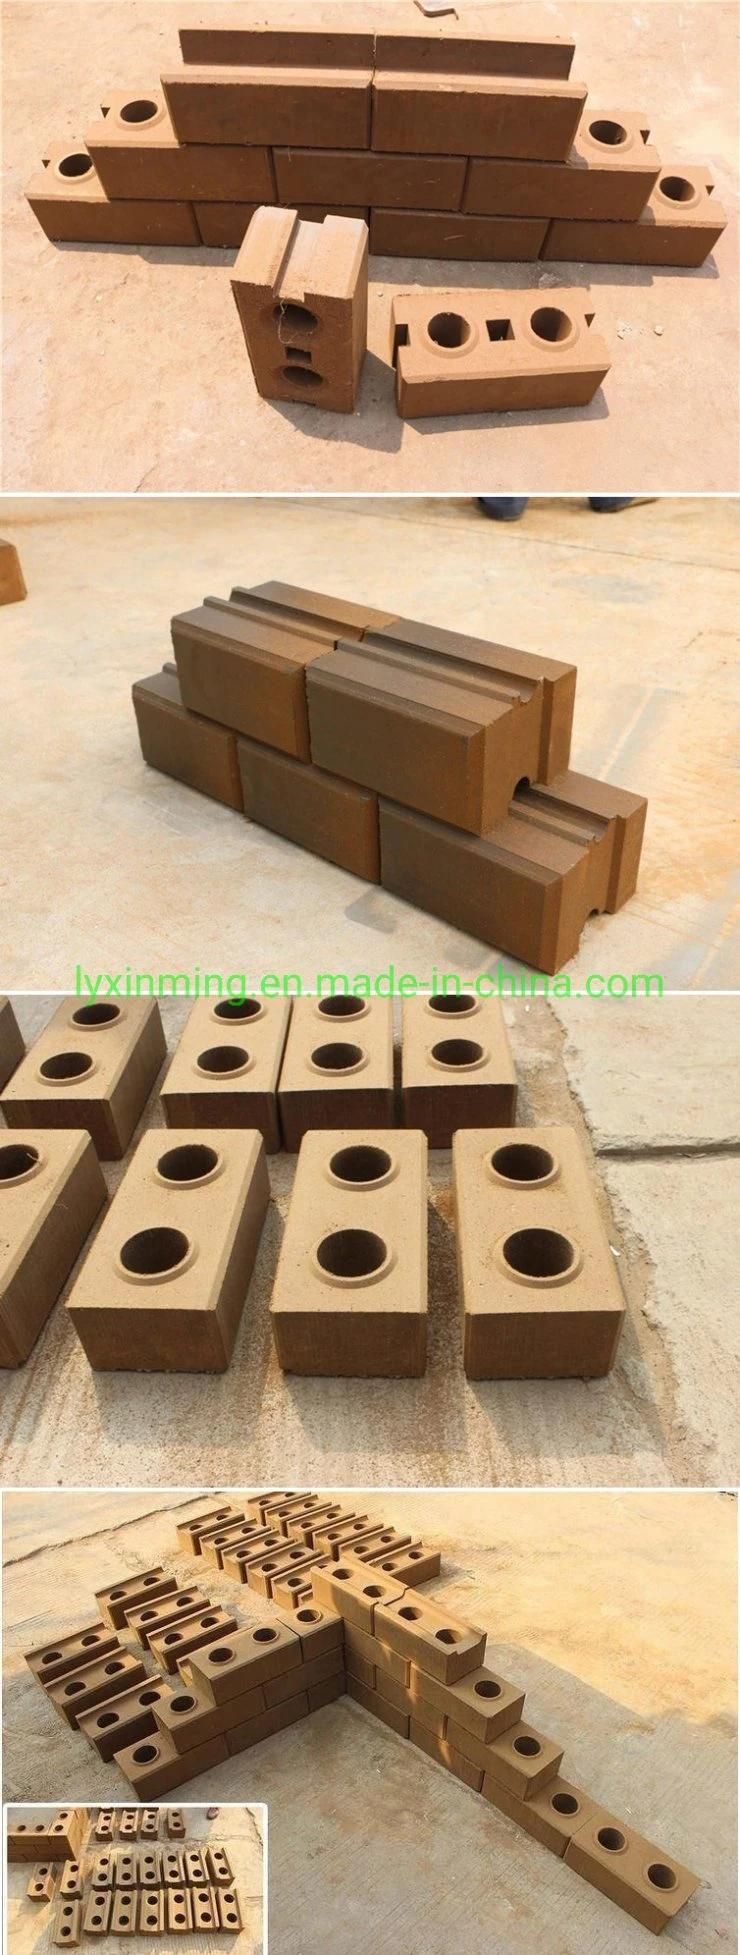 Xinming Xm2-40 Interlocking Brick Making Machine Clay Hollow Block Making Machine for Brick Prodution Line